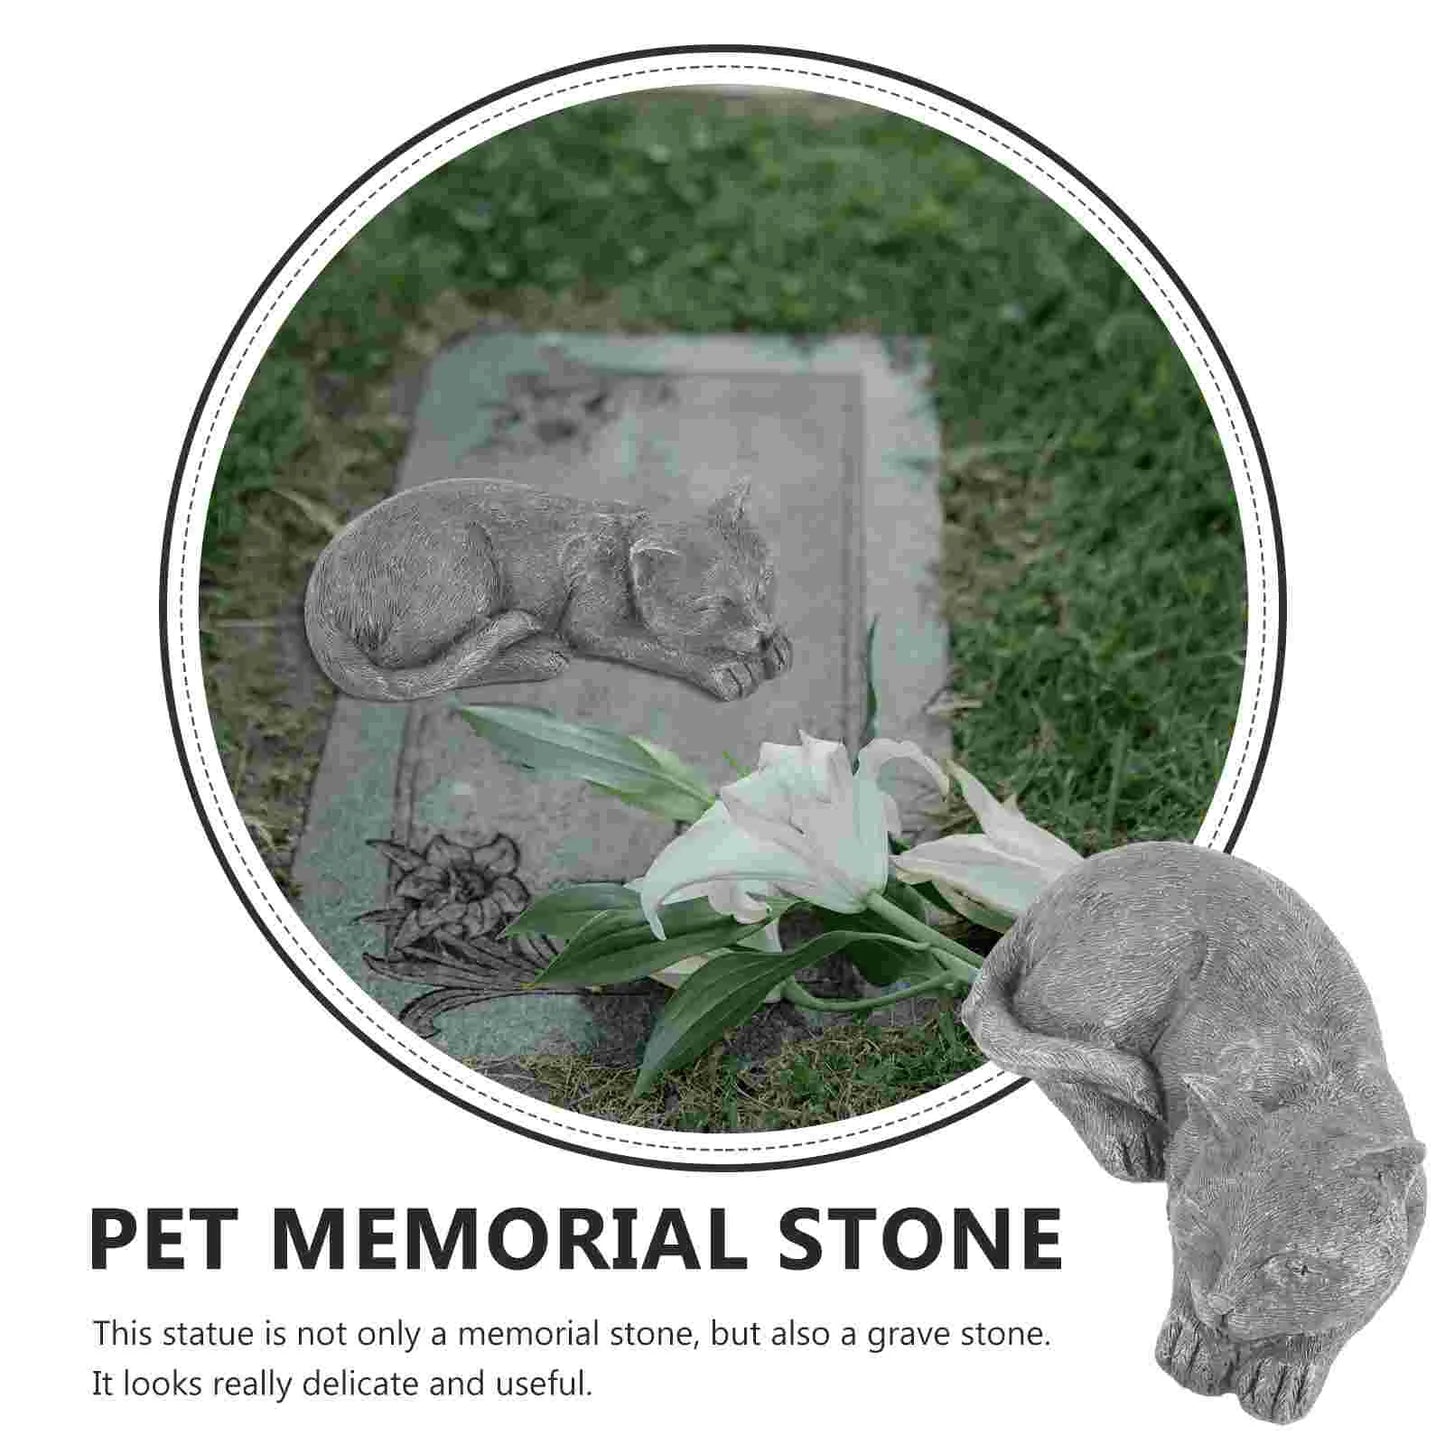 Pet Memorial Statue Tribute Stone for Garden Yard Decor Animal Statute Ornament Gifts Resin Headstones Outdoor Grave